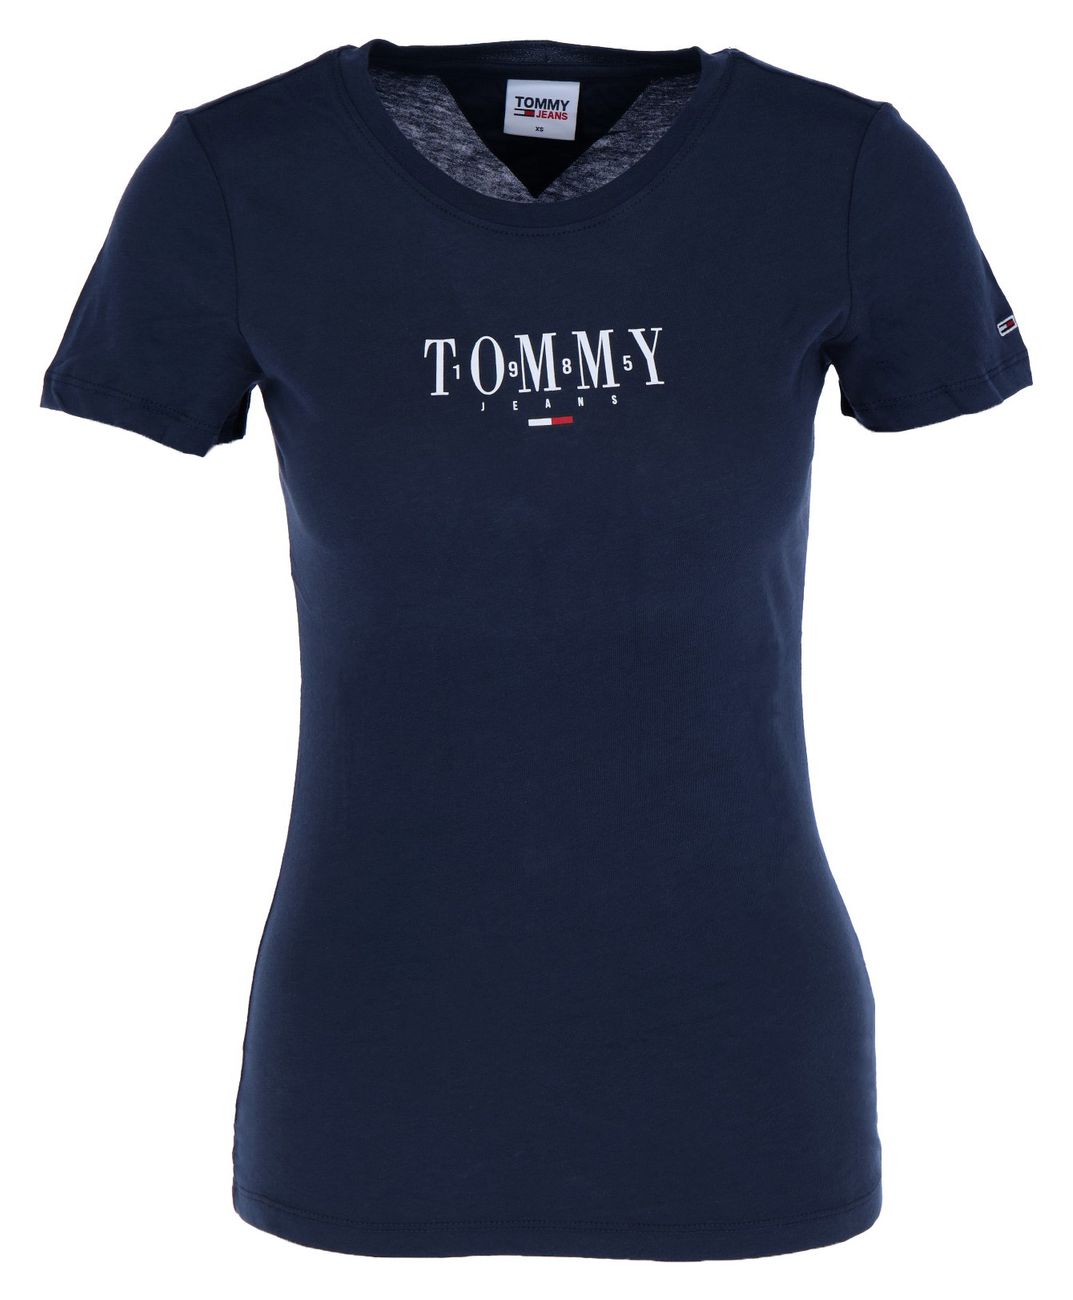 TOMMY JEANS TJW SKINNY ESSENTIAL LOGO 1 SS Damen T-Shirt